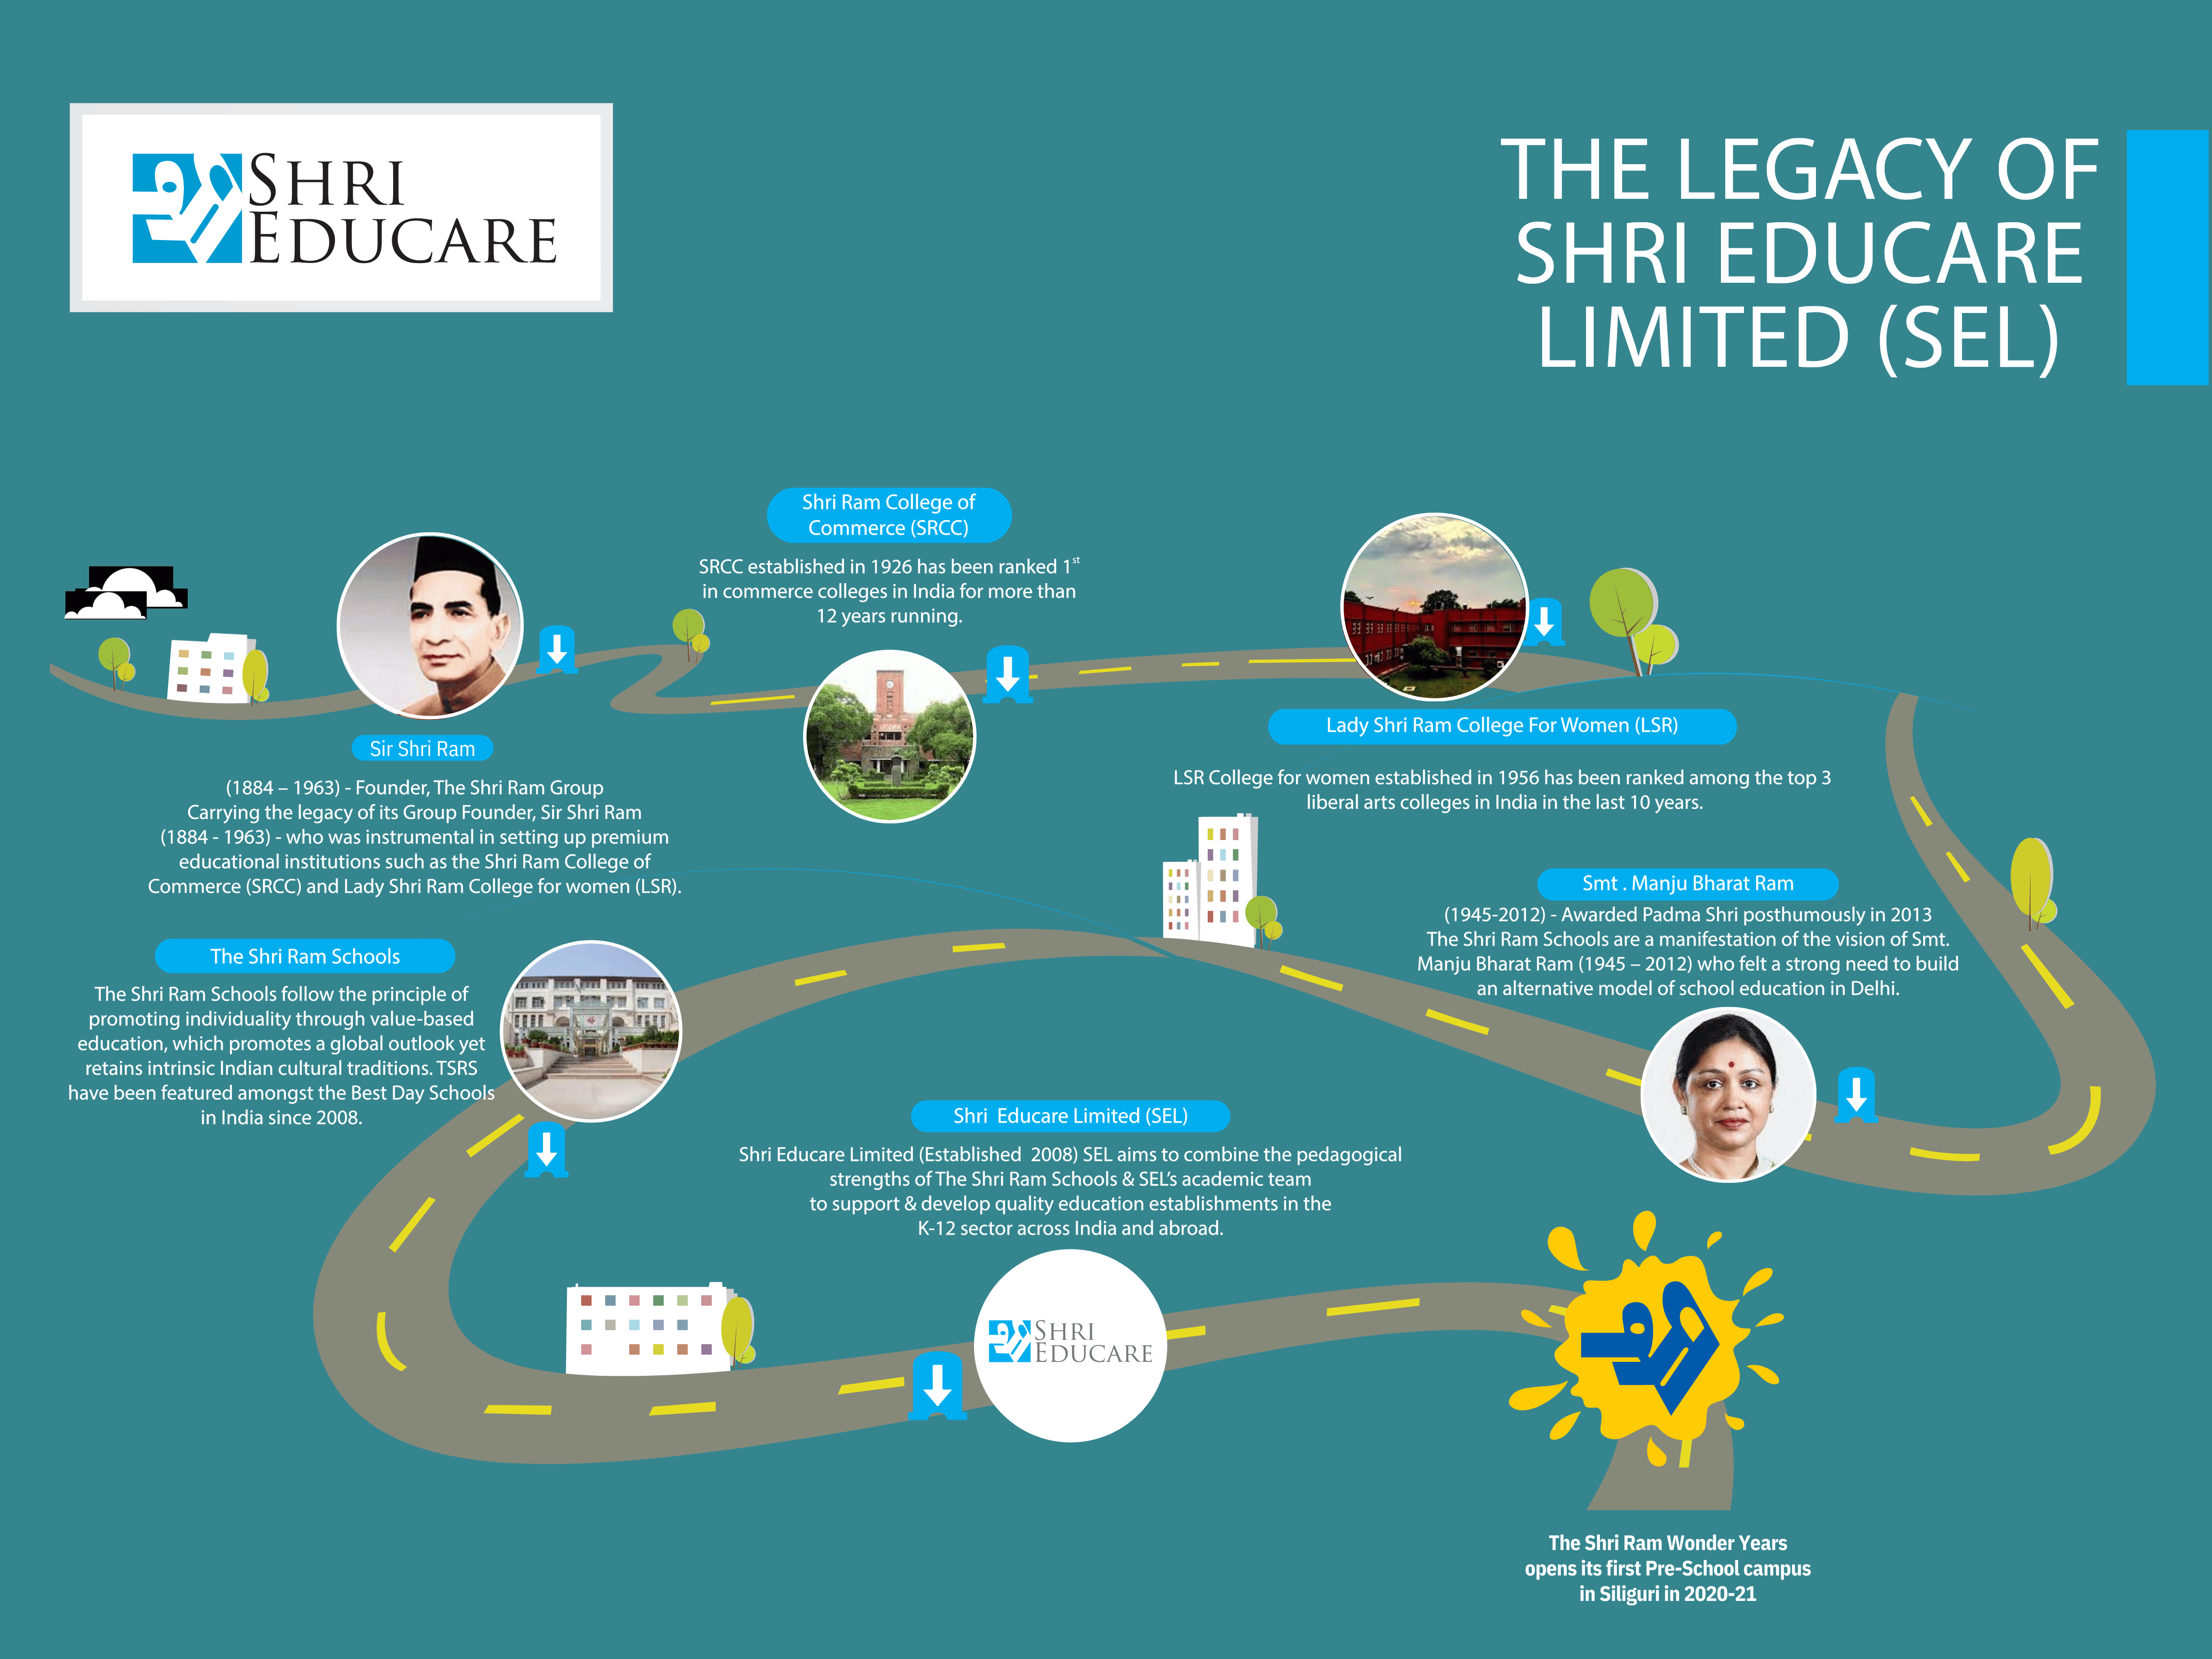 The Legacy of Shri Educare Limited (SEL)